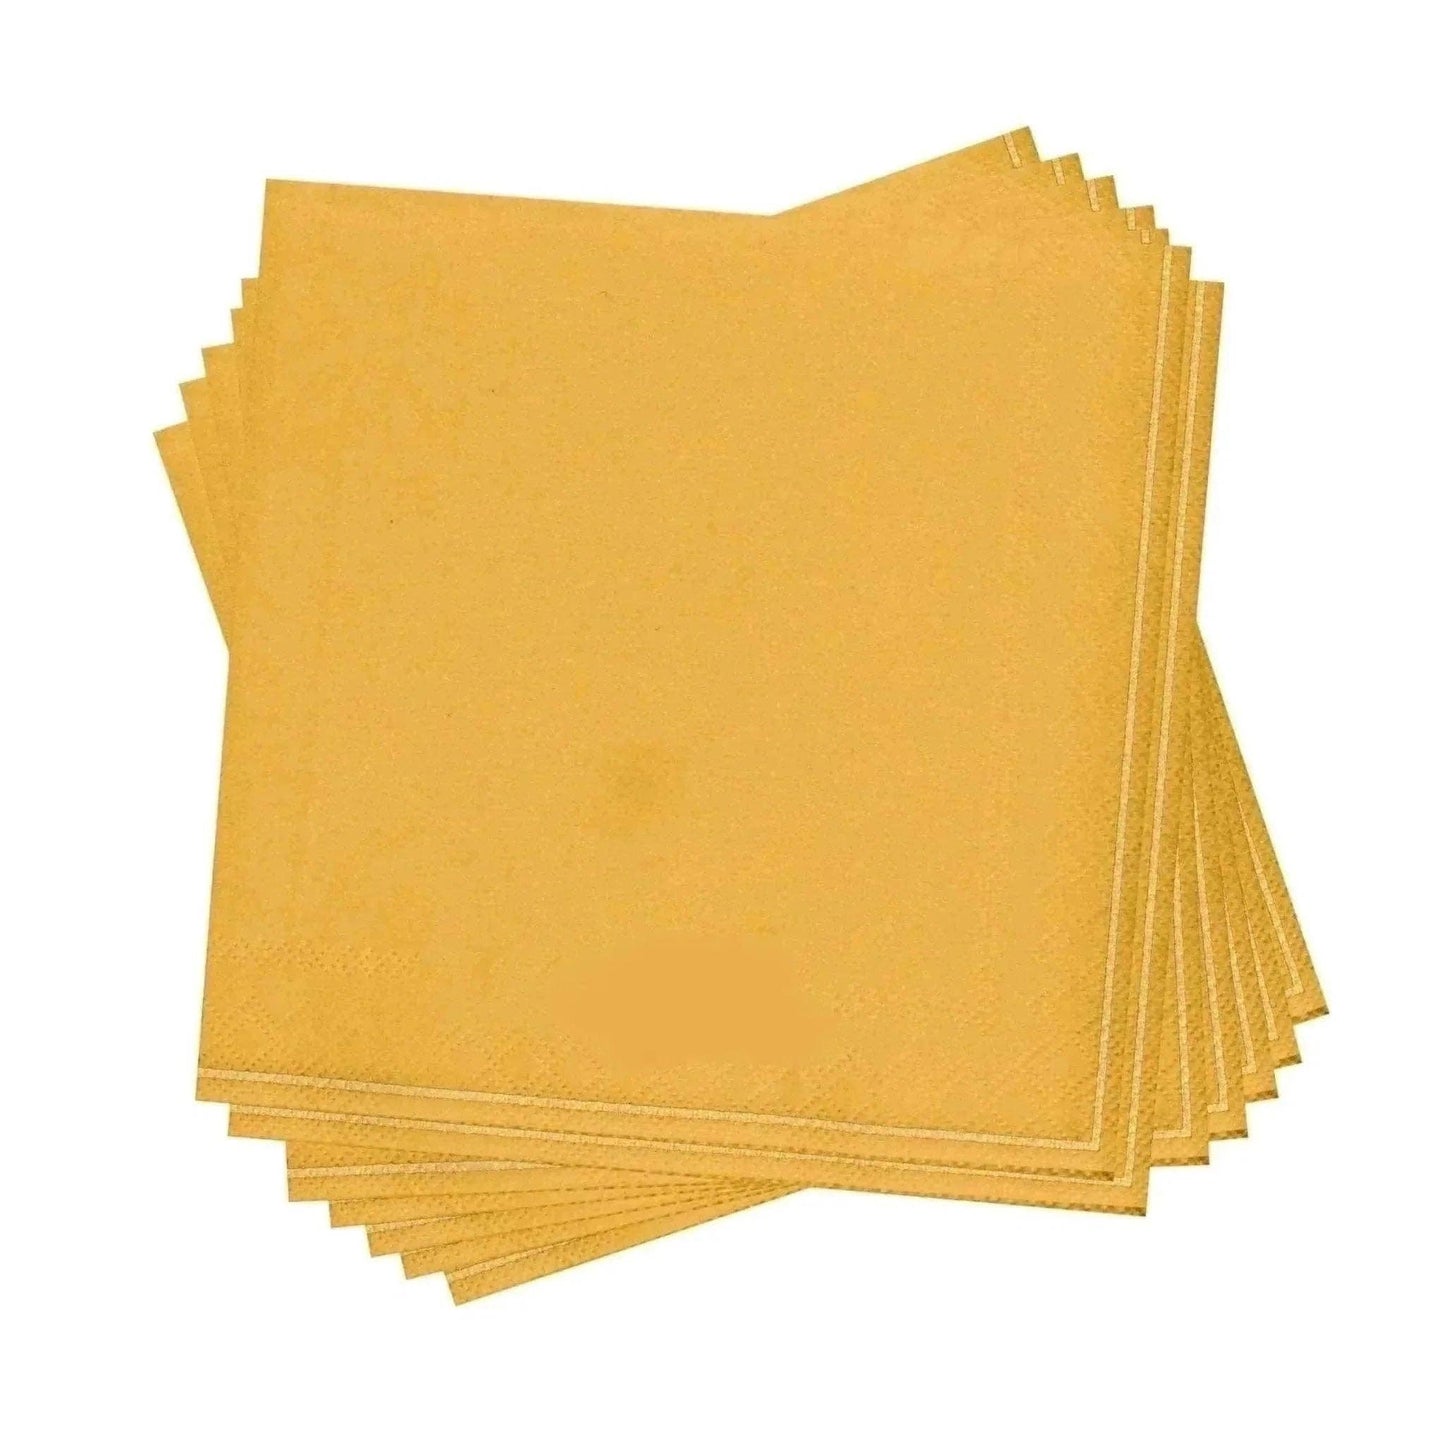 Yellow with Gold Stripe Paper Cocktail Napkins | 20 Napkins: 20 Beverage Napkins - 5" x 5"